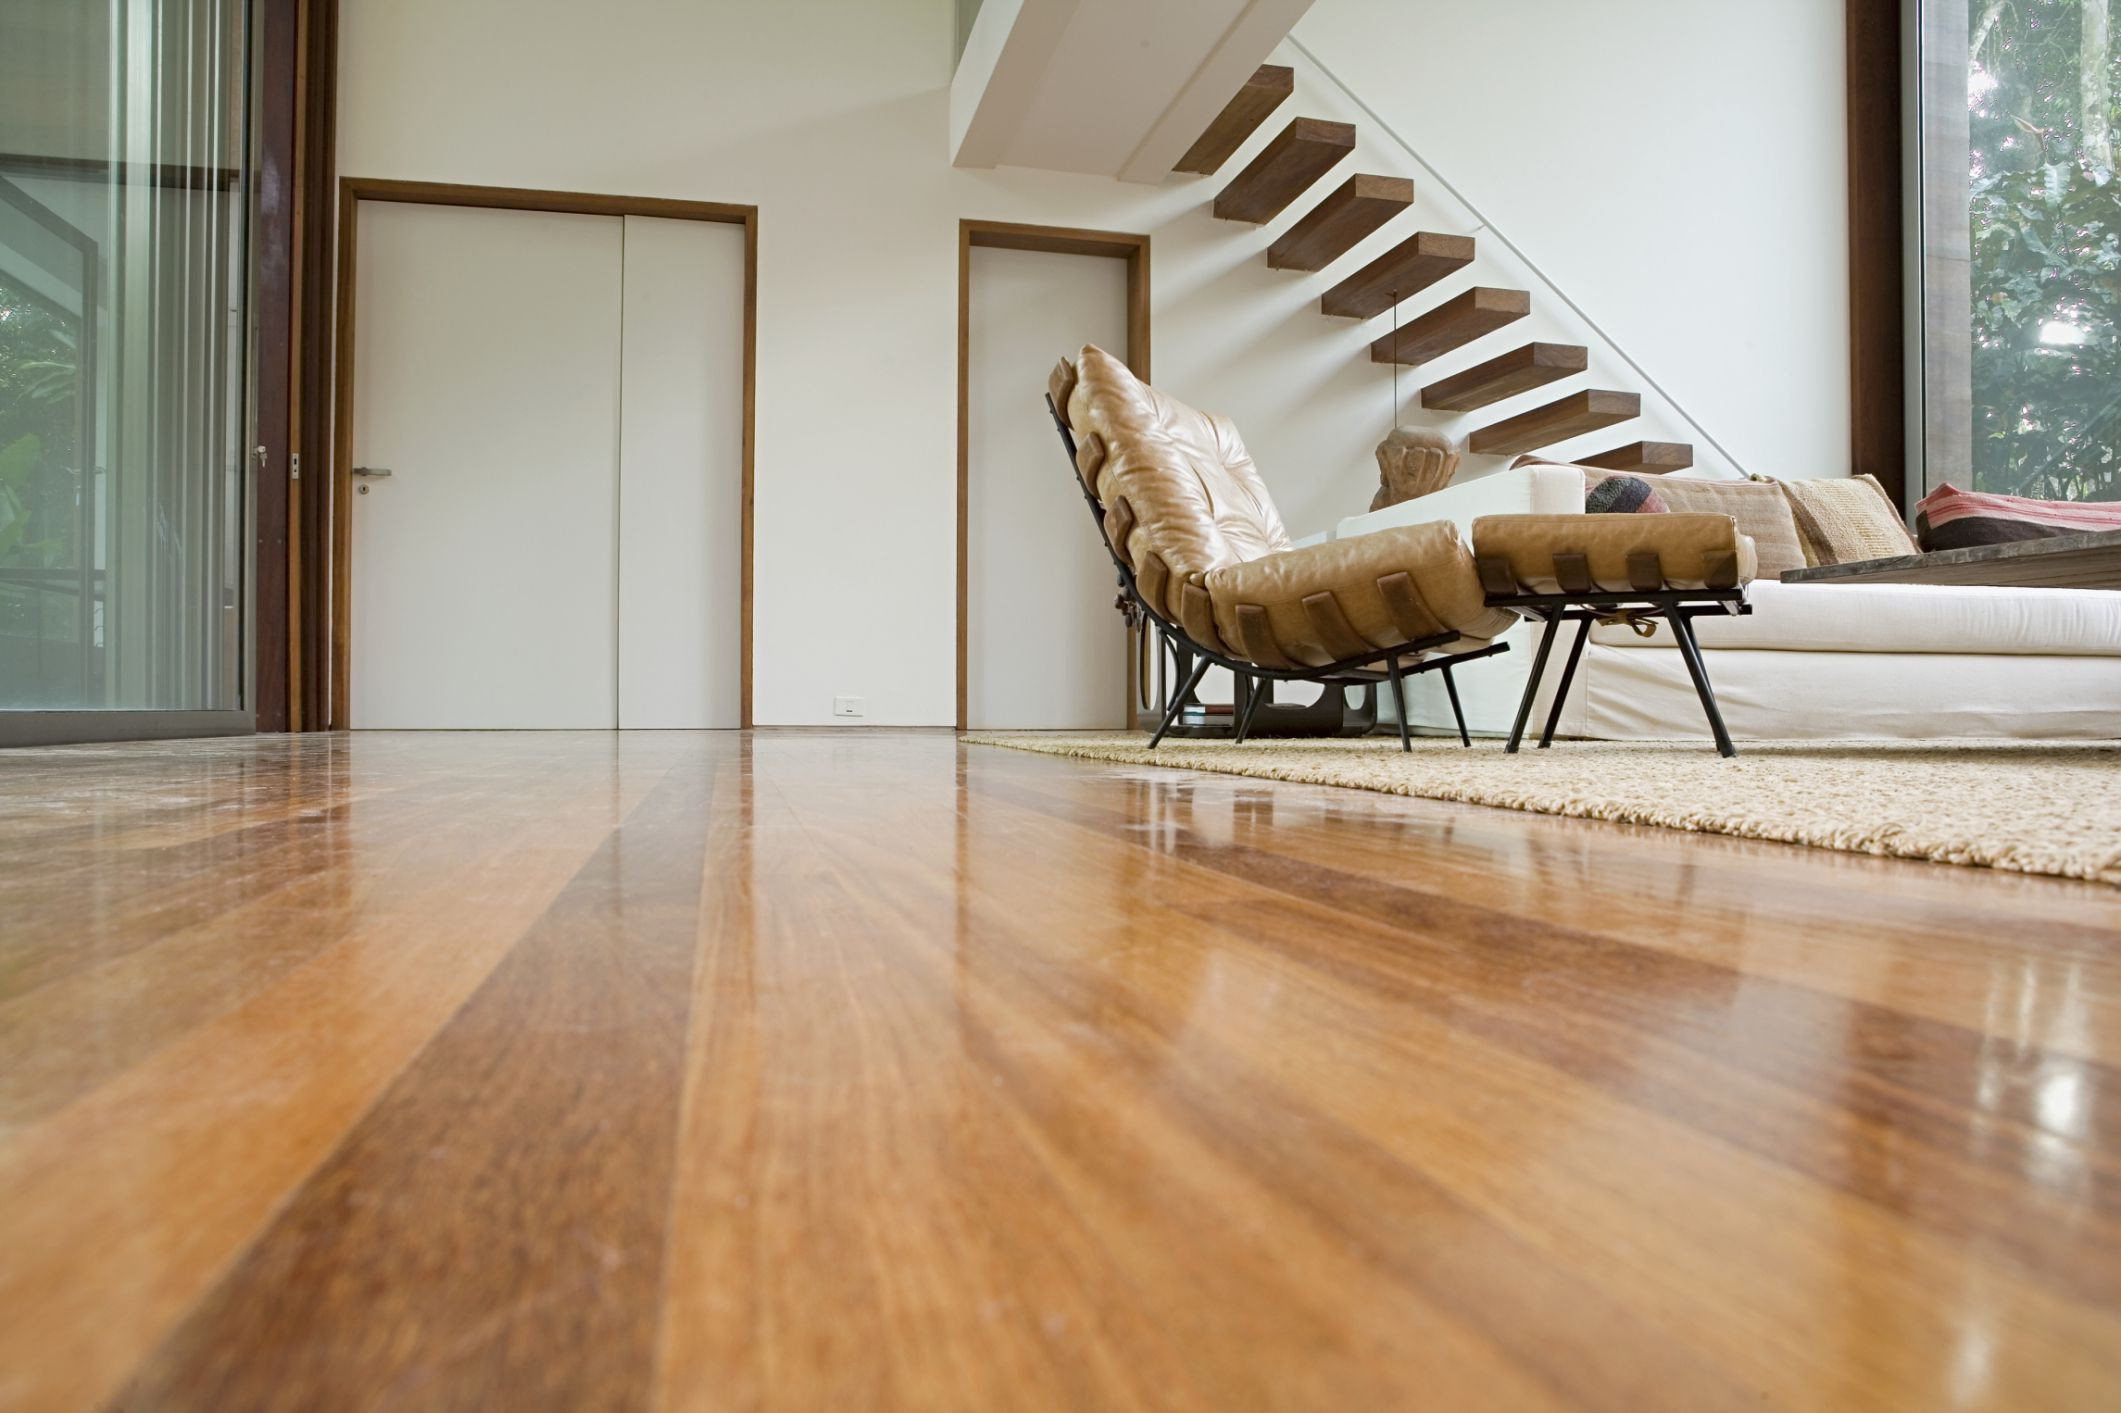 18 Best 3 1 4 White Oak Hardwood Flooring 2022 free download 3 1 4 white oak hardwood flooring of engineered wood flooring vs solid wood flooring pertaining to 200571260 001 highres 56a49dec5f9b58b7d0d7dc1e